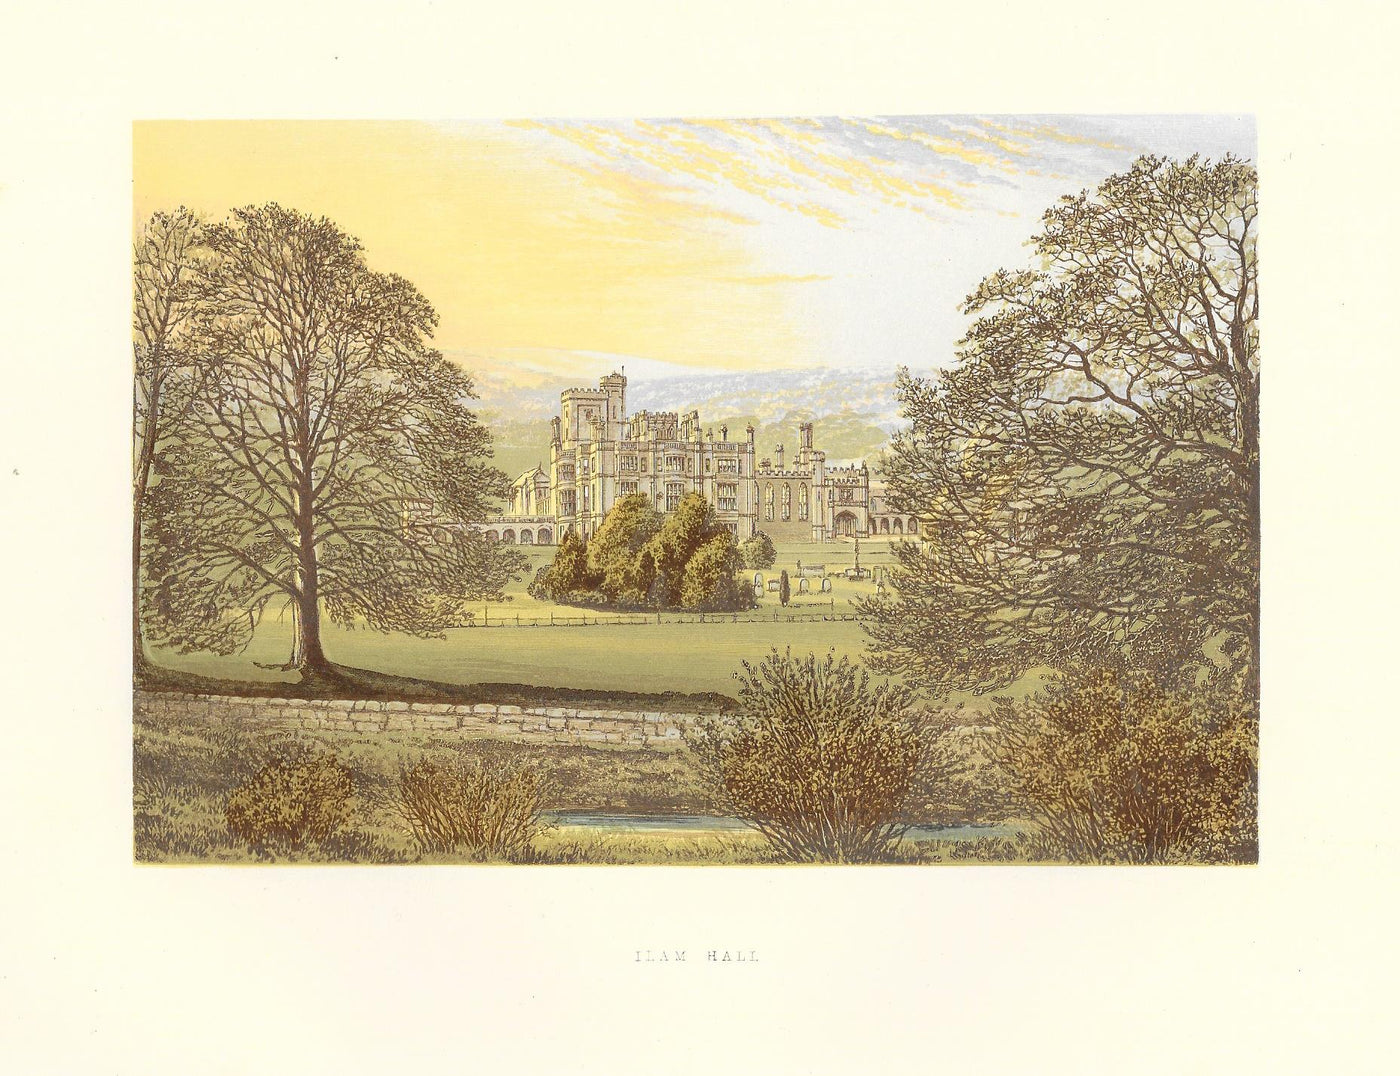 Ilam Park Derbyshire guaranteed original antique print 1880